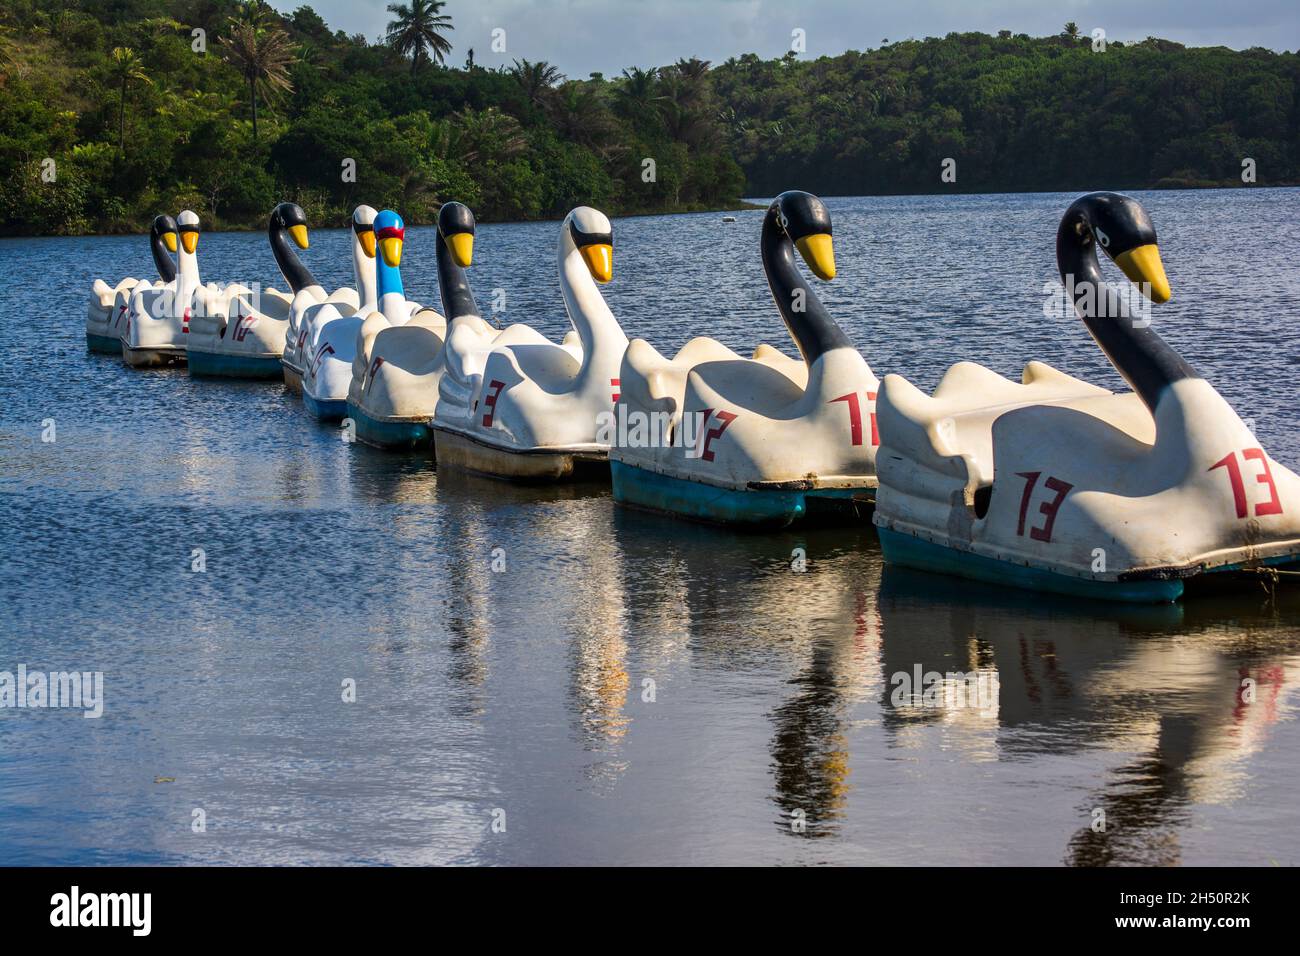 Salvador, Bahia, Brasile - 17 agosto 2014: Barca a forma di oca nel Parco Pituacu. Foto Stock